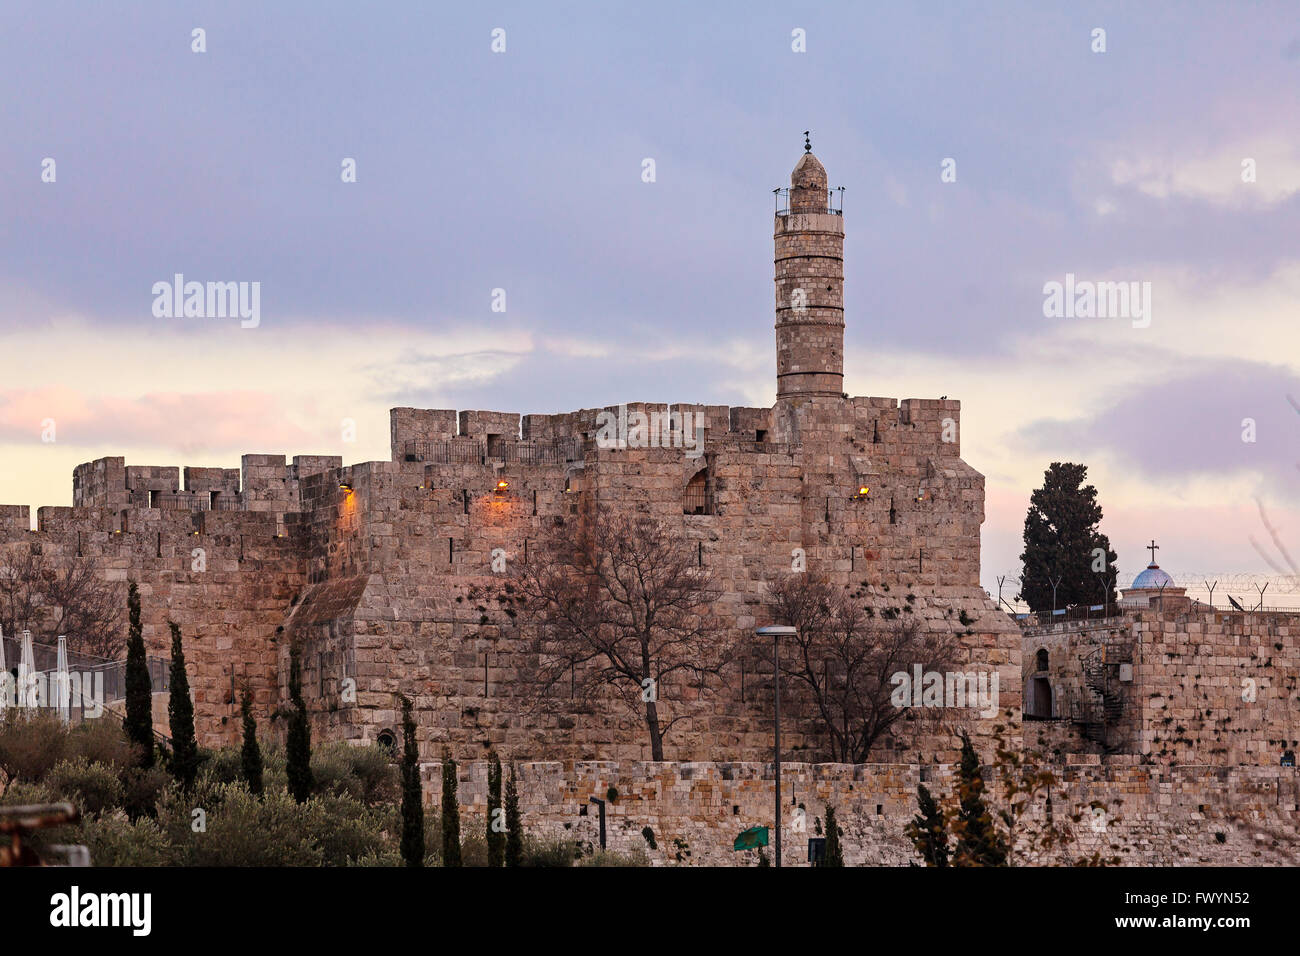 Ancient Citadel inside Old City, Jerusalem, Israel Stock Photo